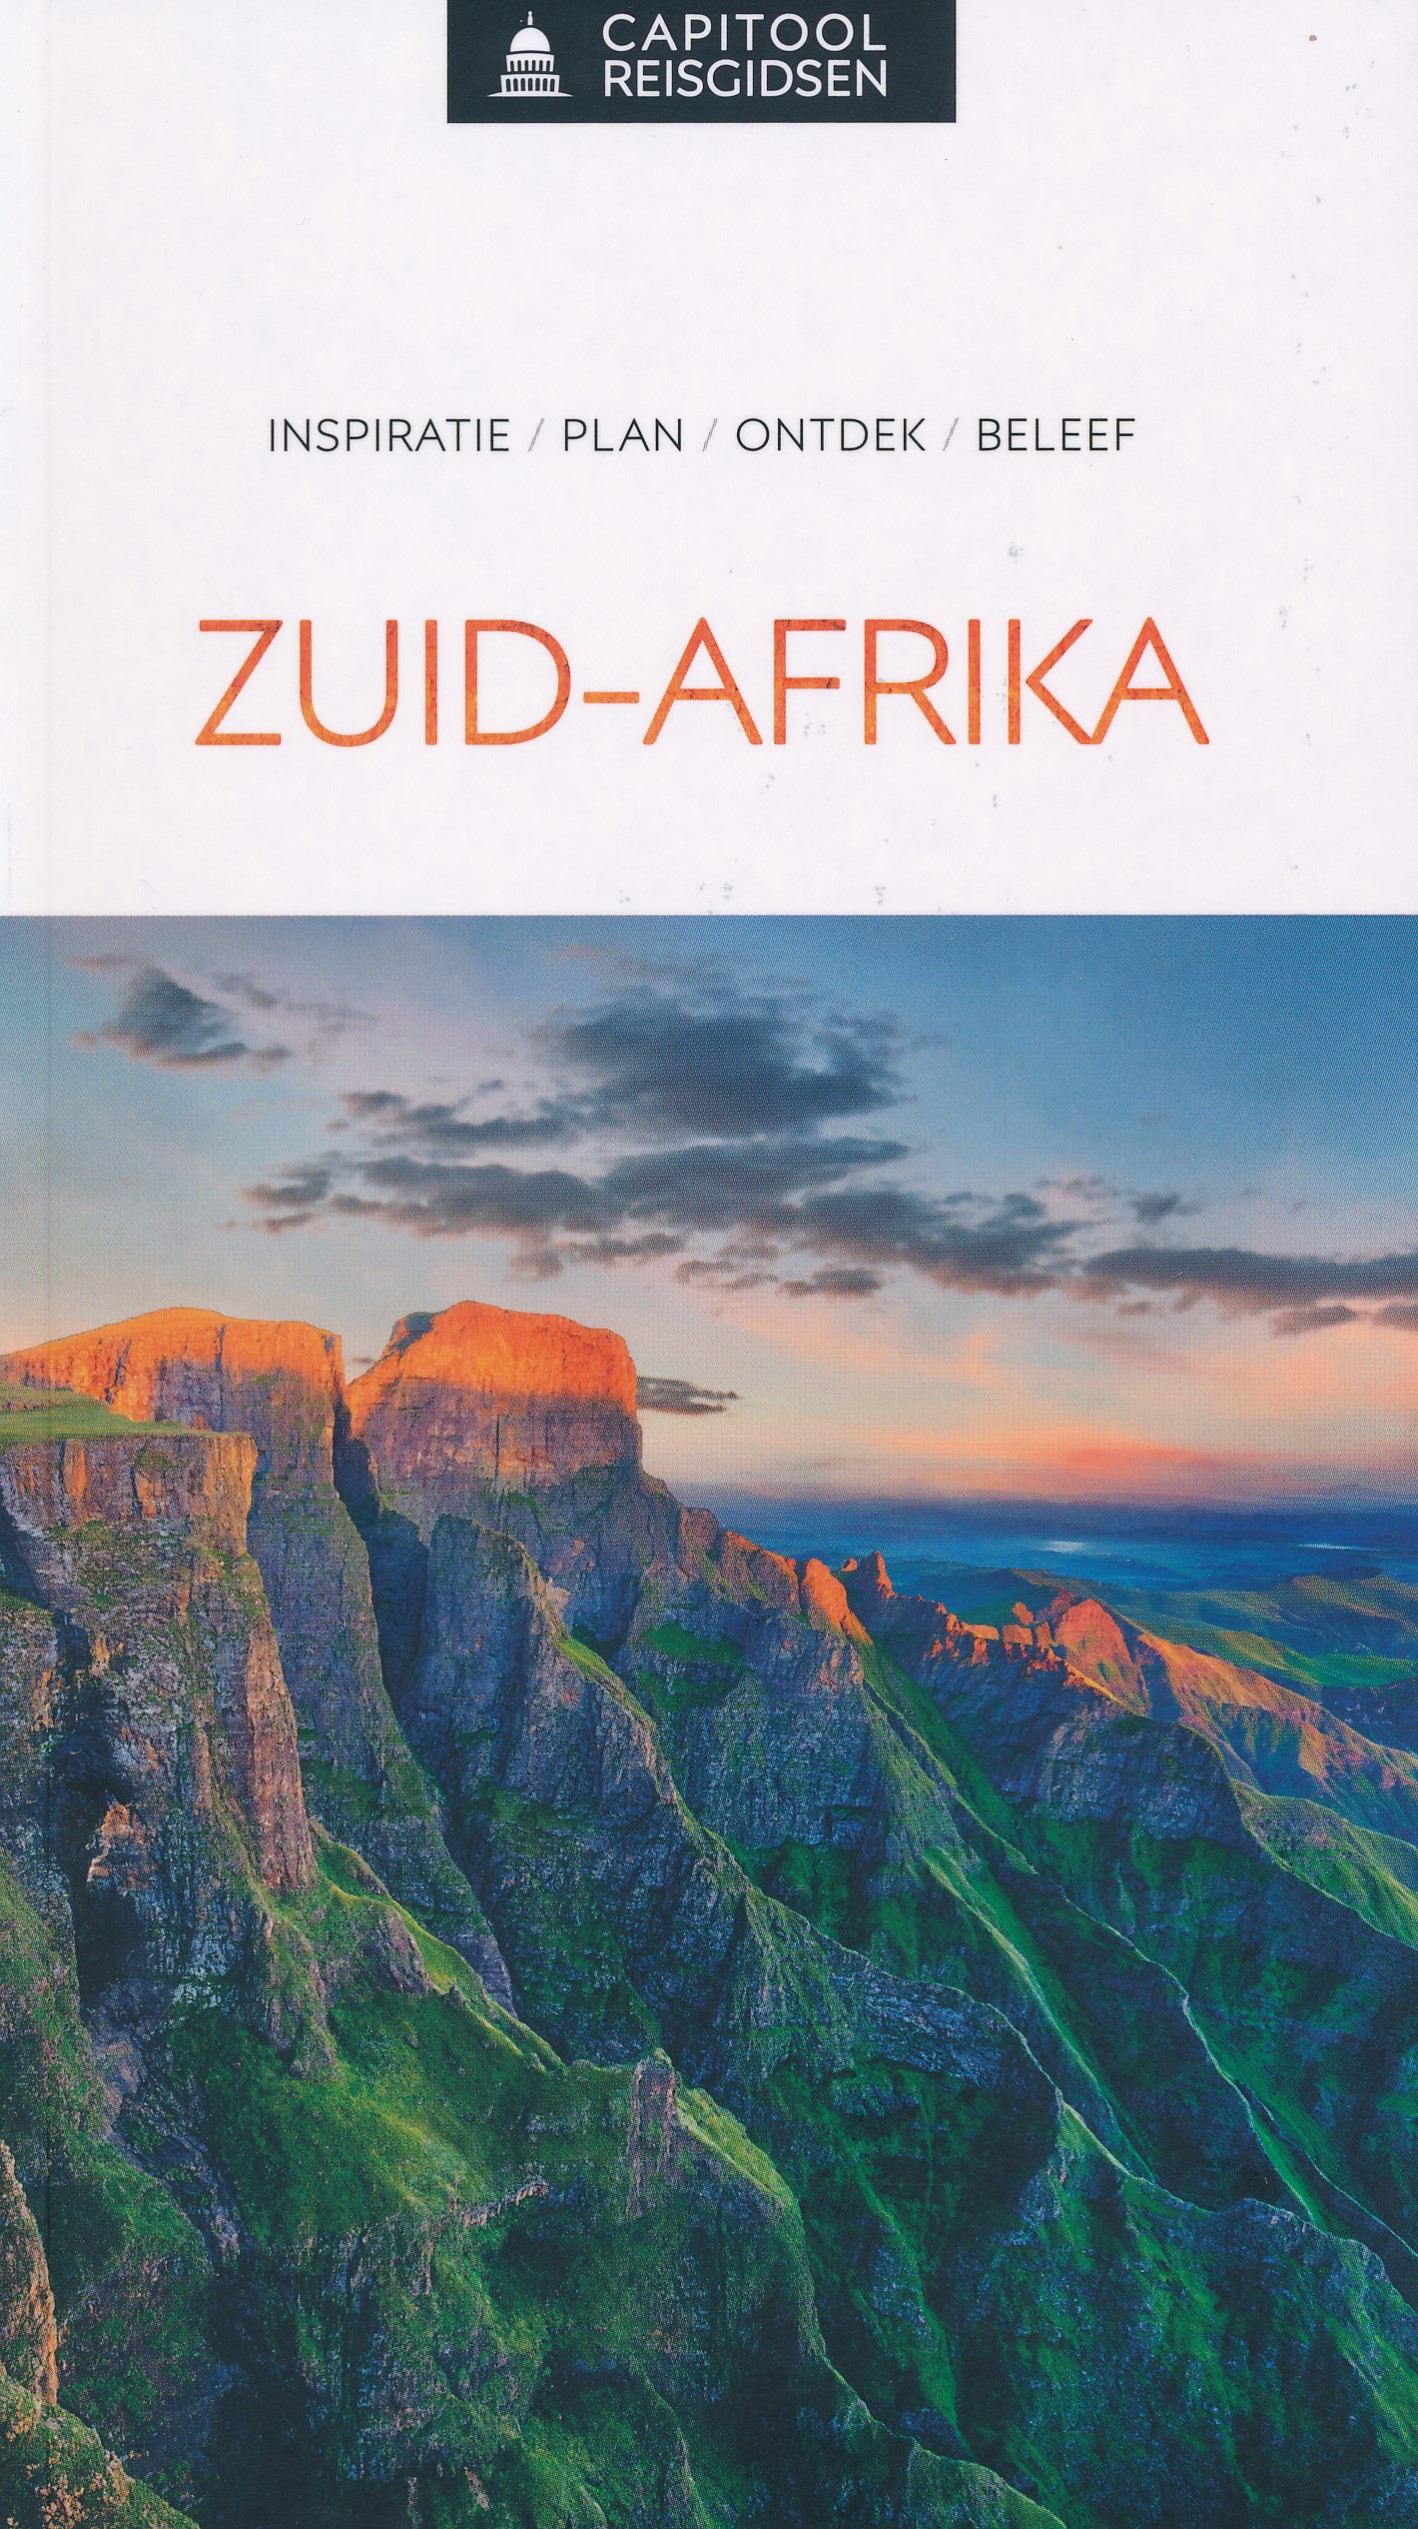 Reisgids Capitool Zuid Afrika | Unieboek